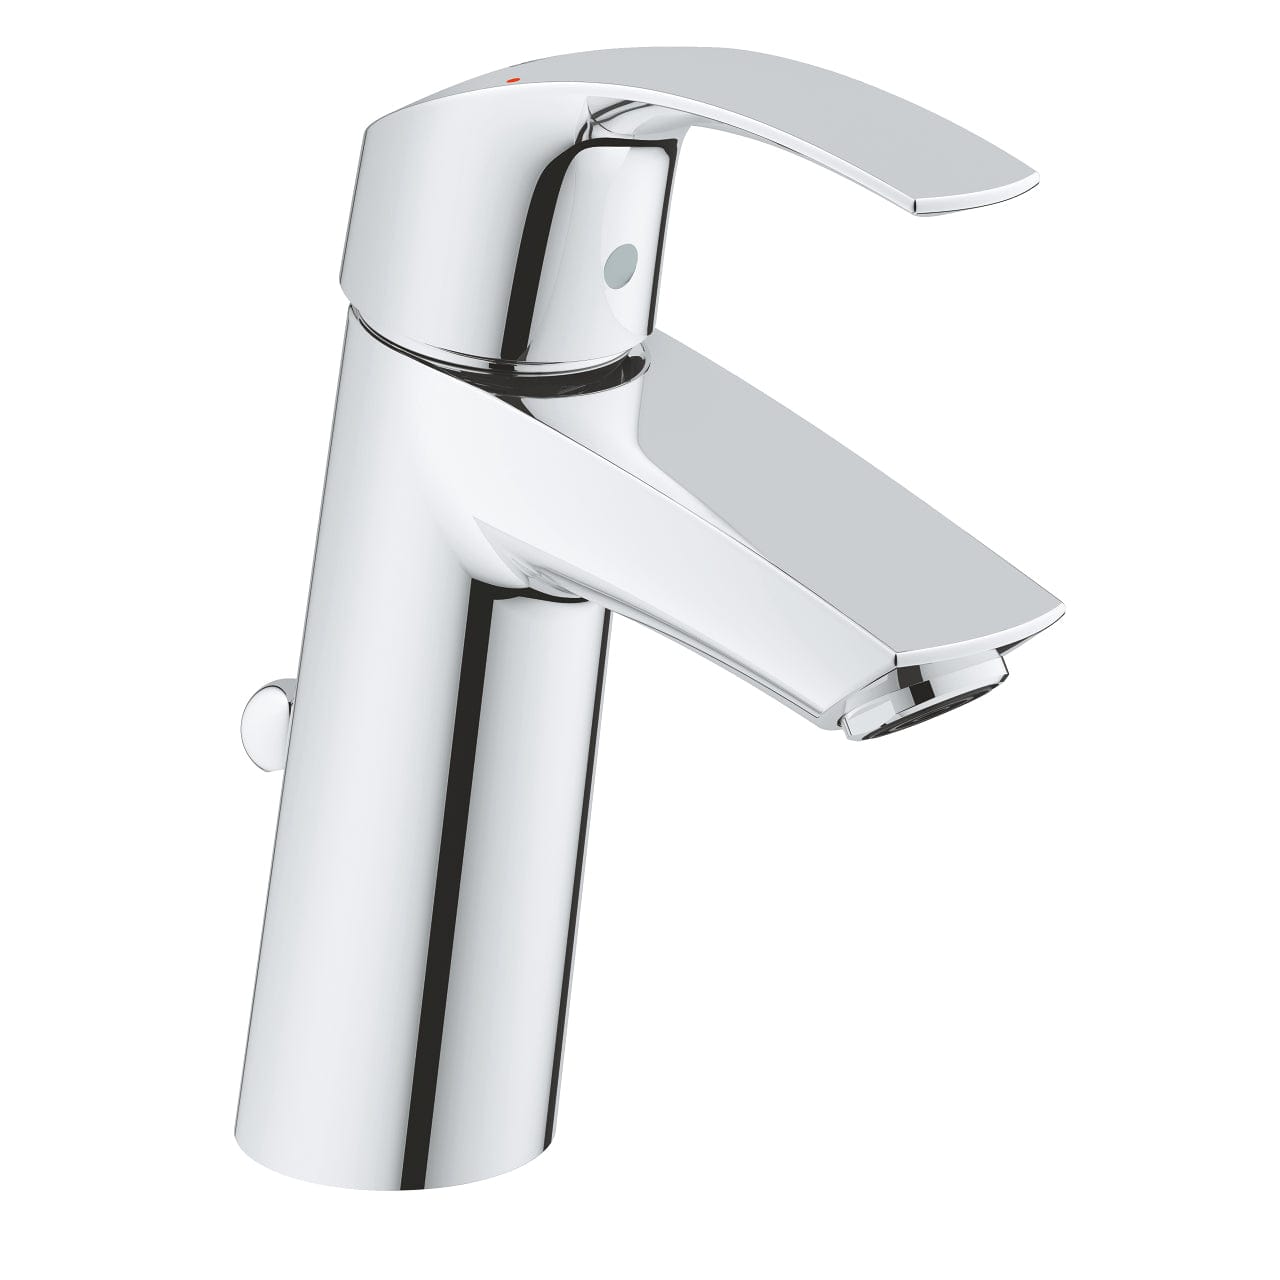 Grohe Euroeco Cosmopolitan T Self-closing Pillar Tap 1/2″, Chrome | Supply Master | Accra, Ghana Bathroom Faucet Buy Tools hardware Building materials